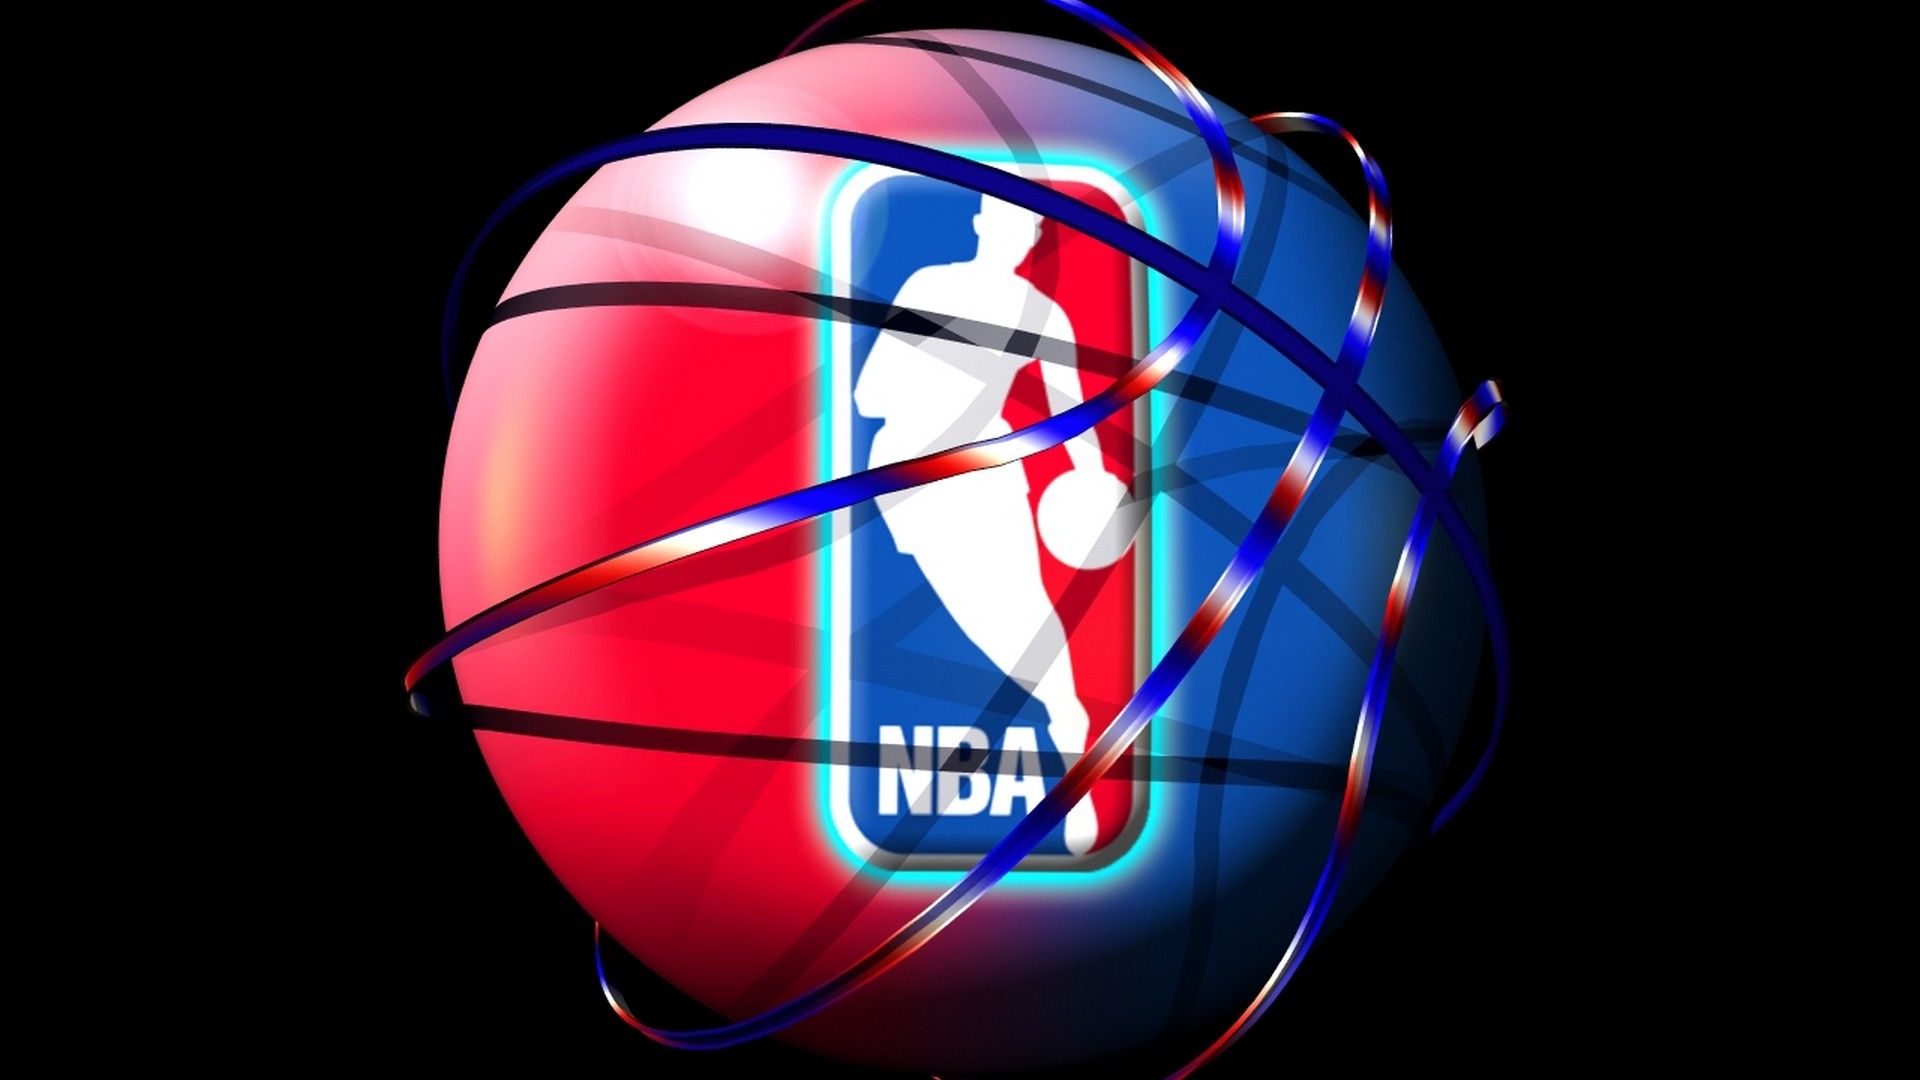 Fondo de pantalla de la NBA | Fondo de pantalla de baloncesto 2019